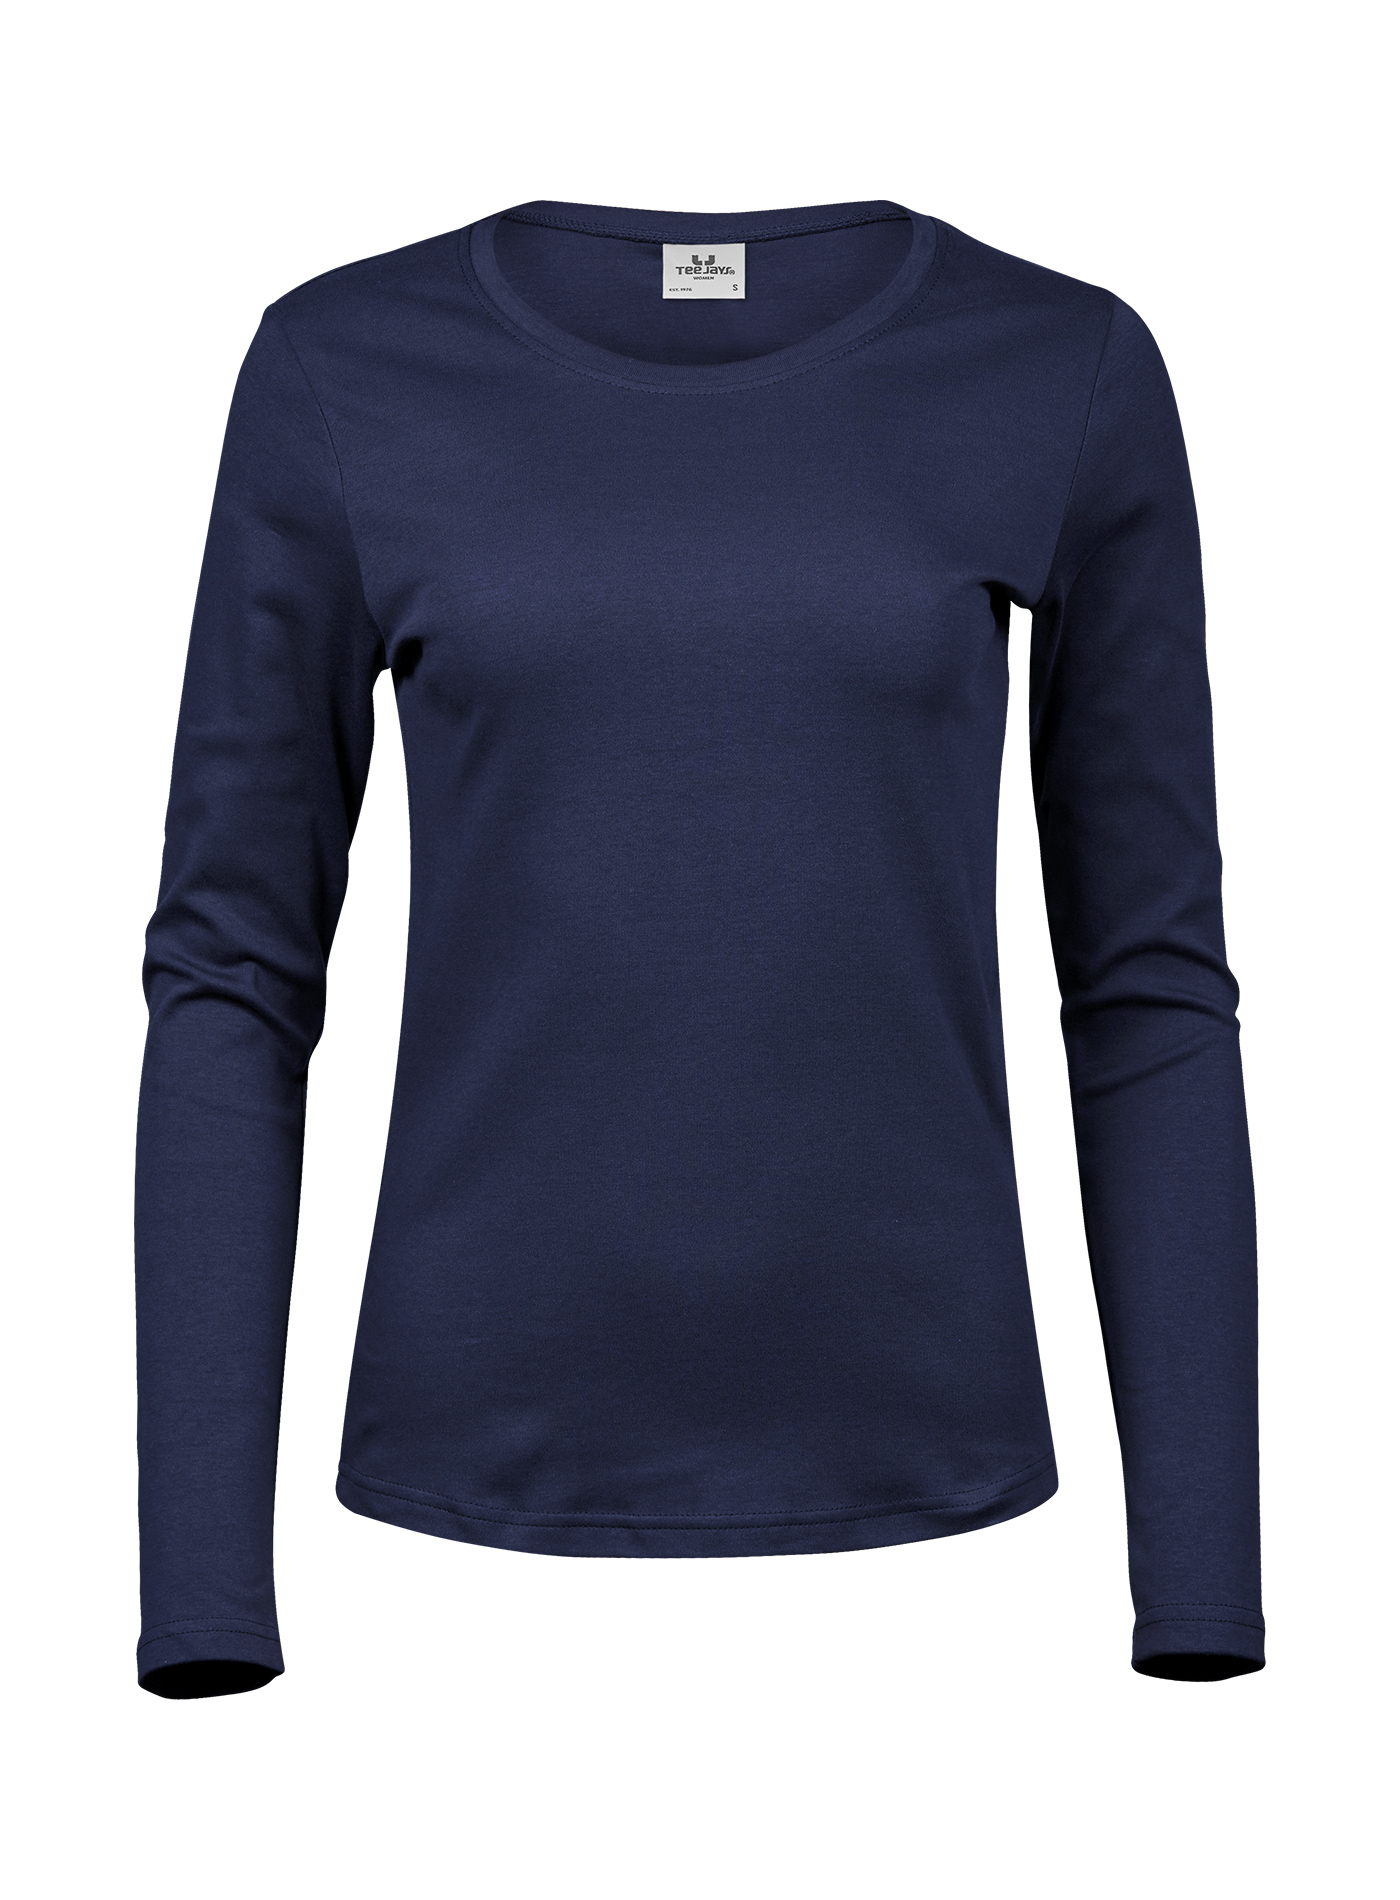 Dámské tričko s dlouhými rukávy Tee Jays Interlock - Námořní modrá XXL